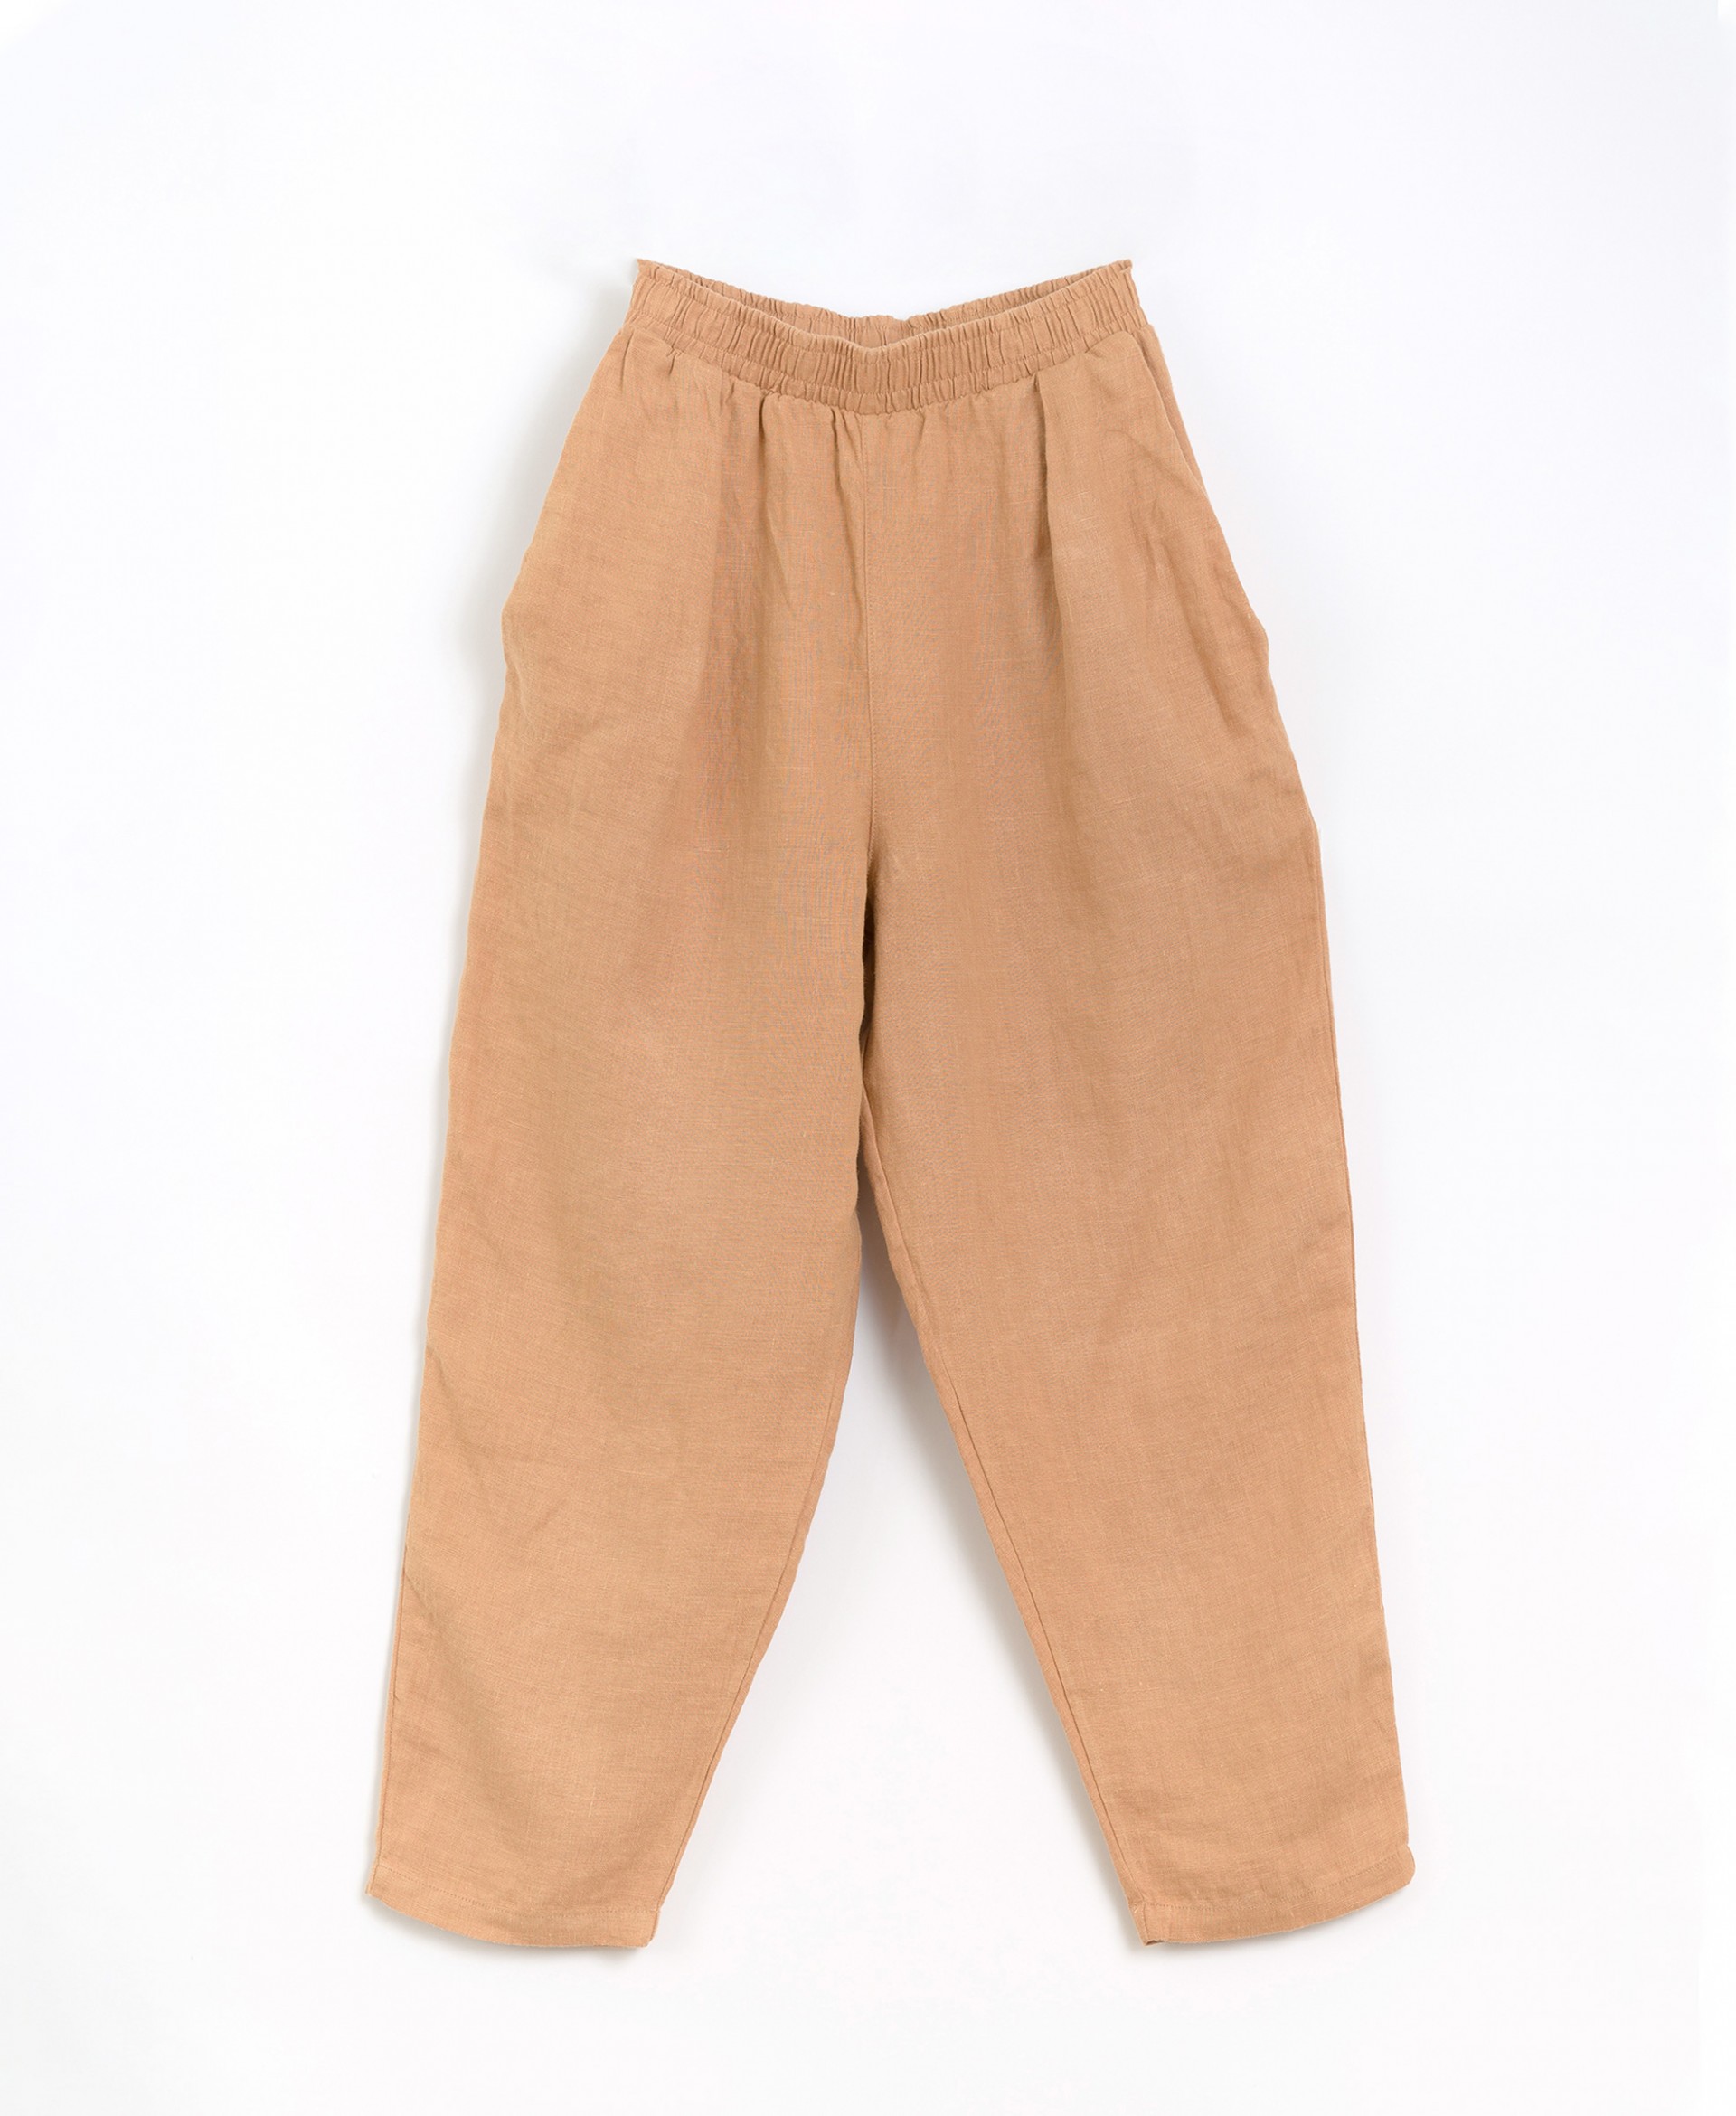 Linen pants with elastic waist | Basketry